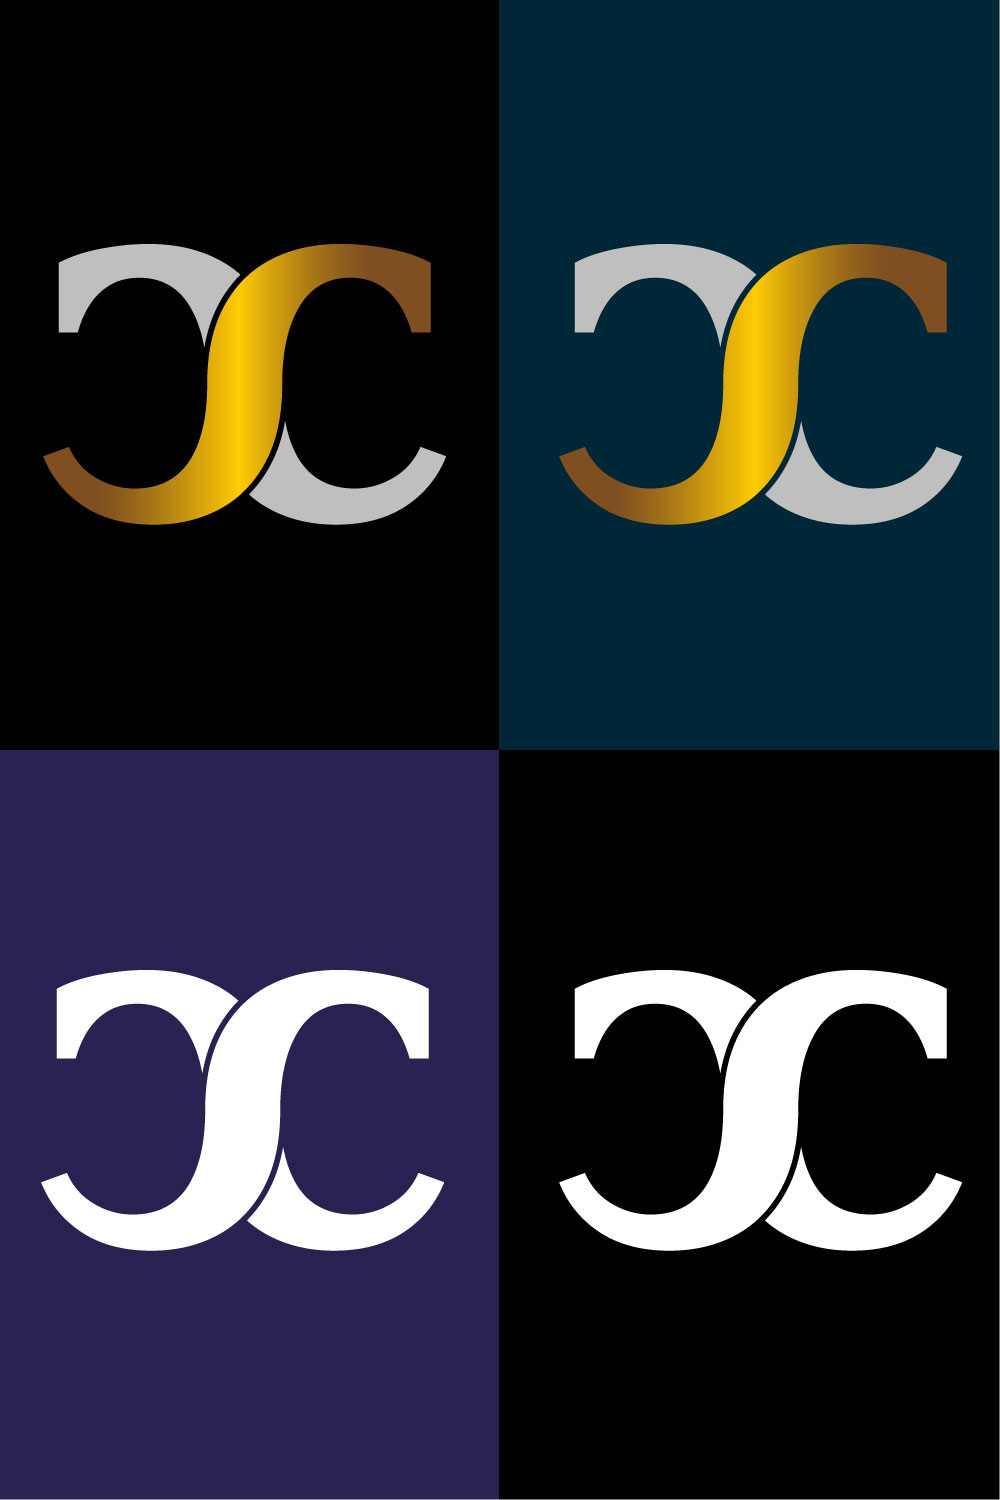 CC Letter Logo Pinterest collage image.